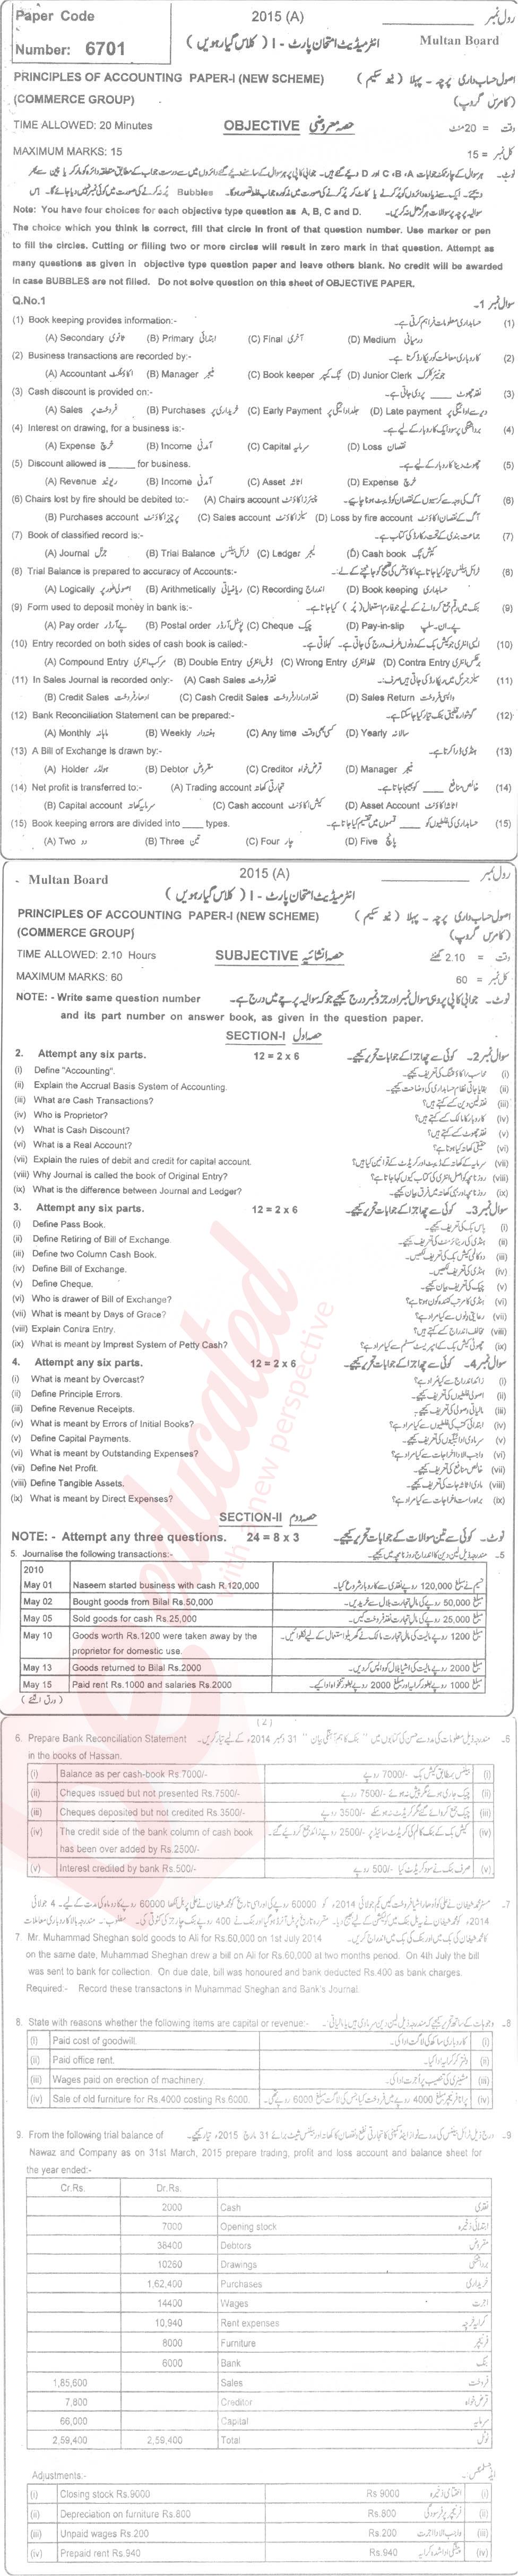 Principles of Accounting ICOM Part 1 Past Paper Group 1 BISE Multan 2015